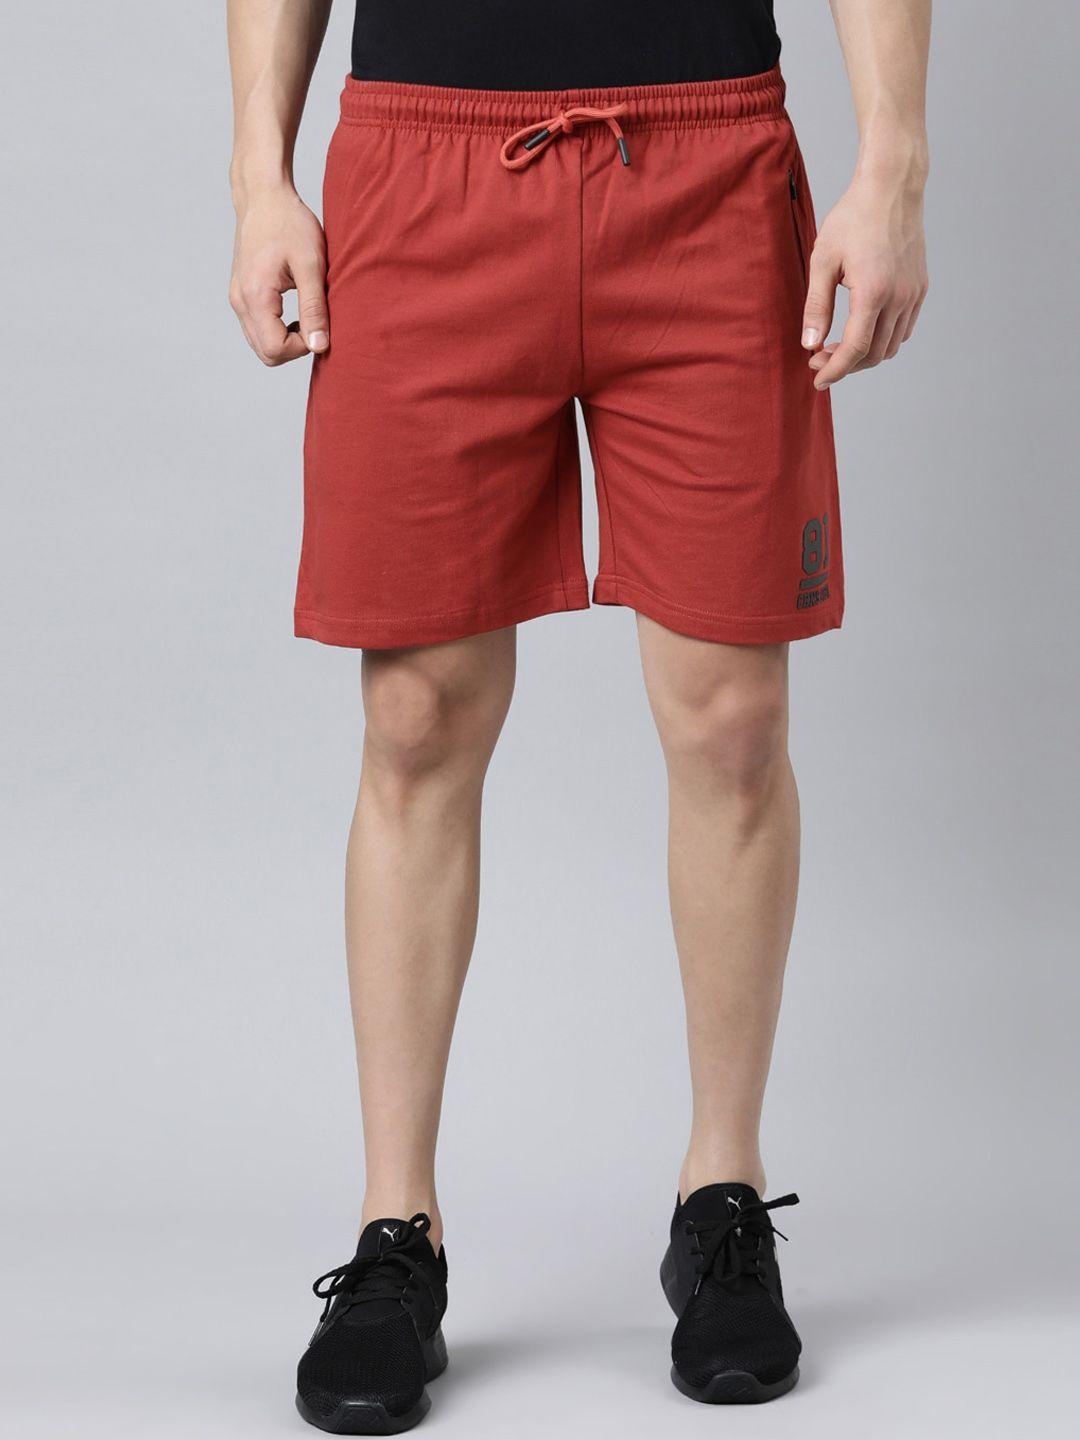 chennis-men-sports-cotton-shorts